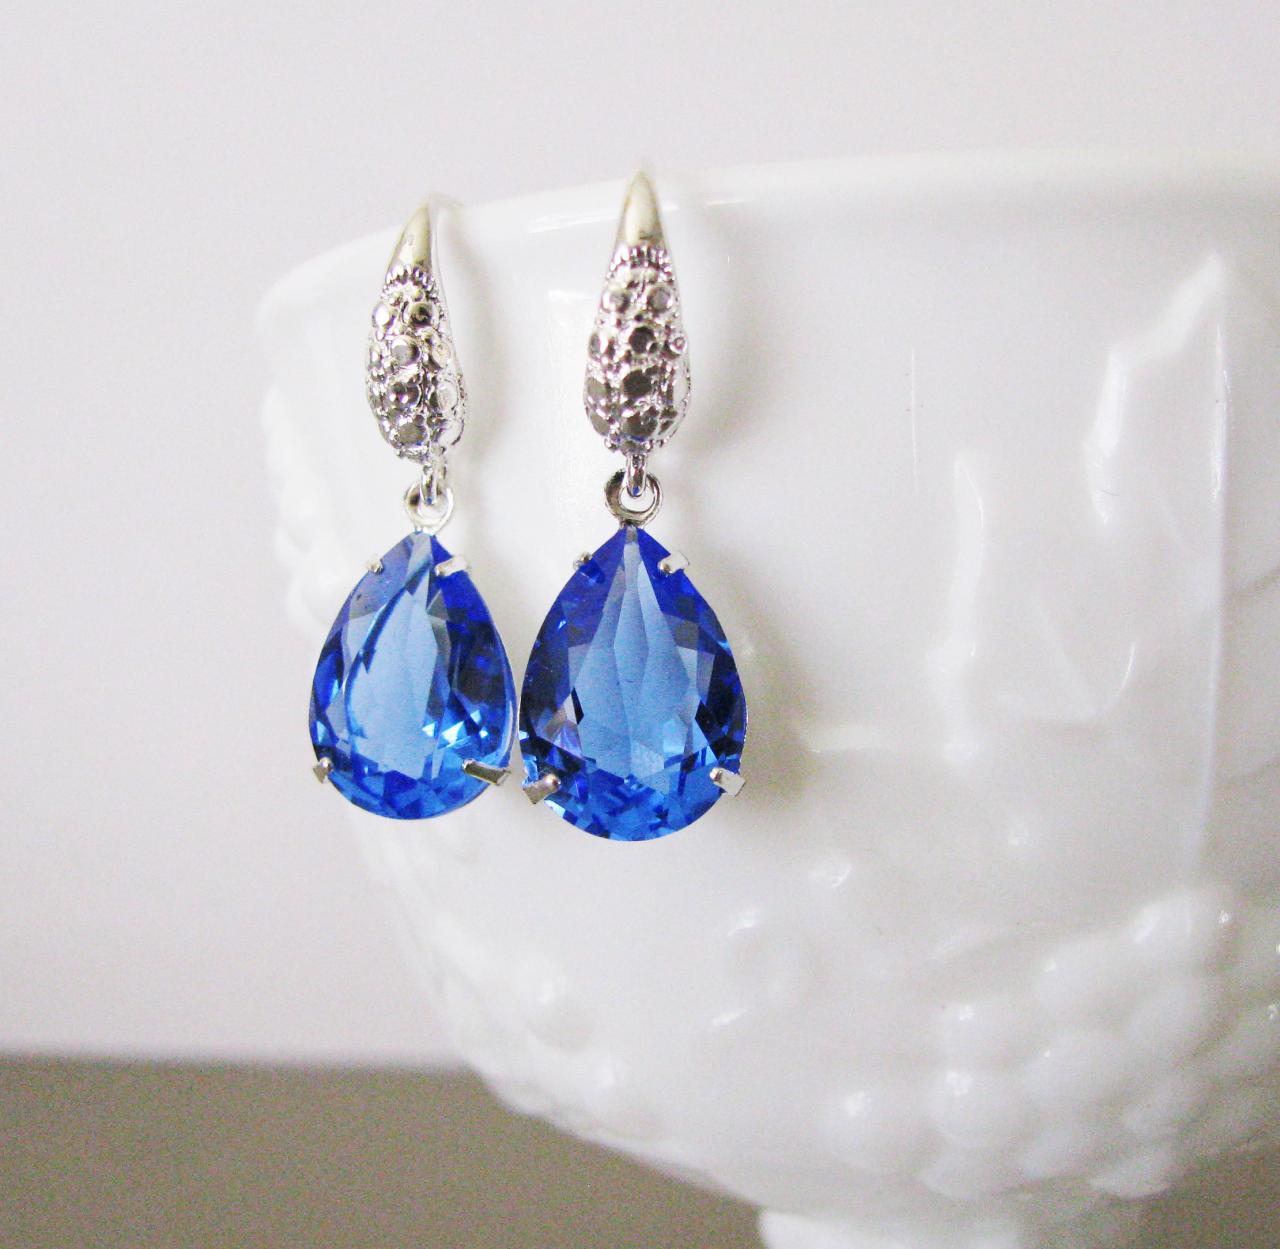 Sapphire Blue Swarovski Crystal Earrings